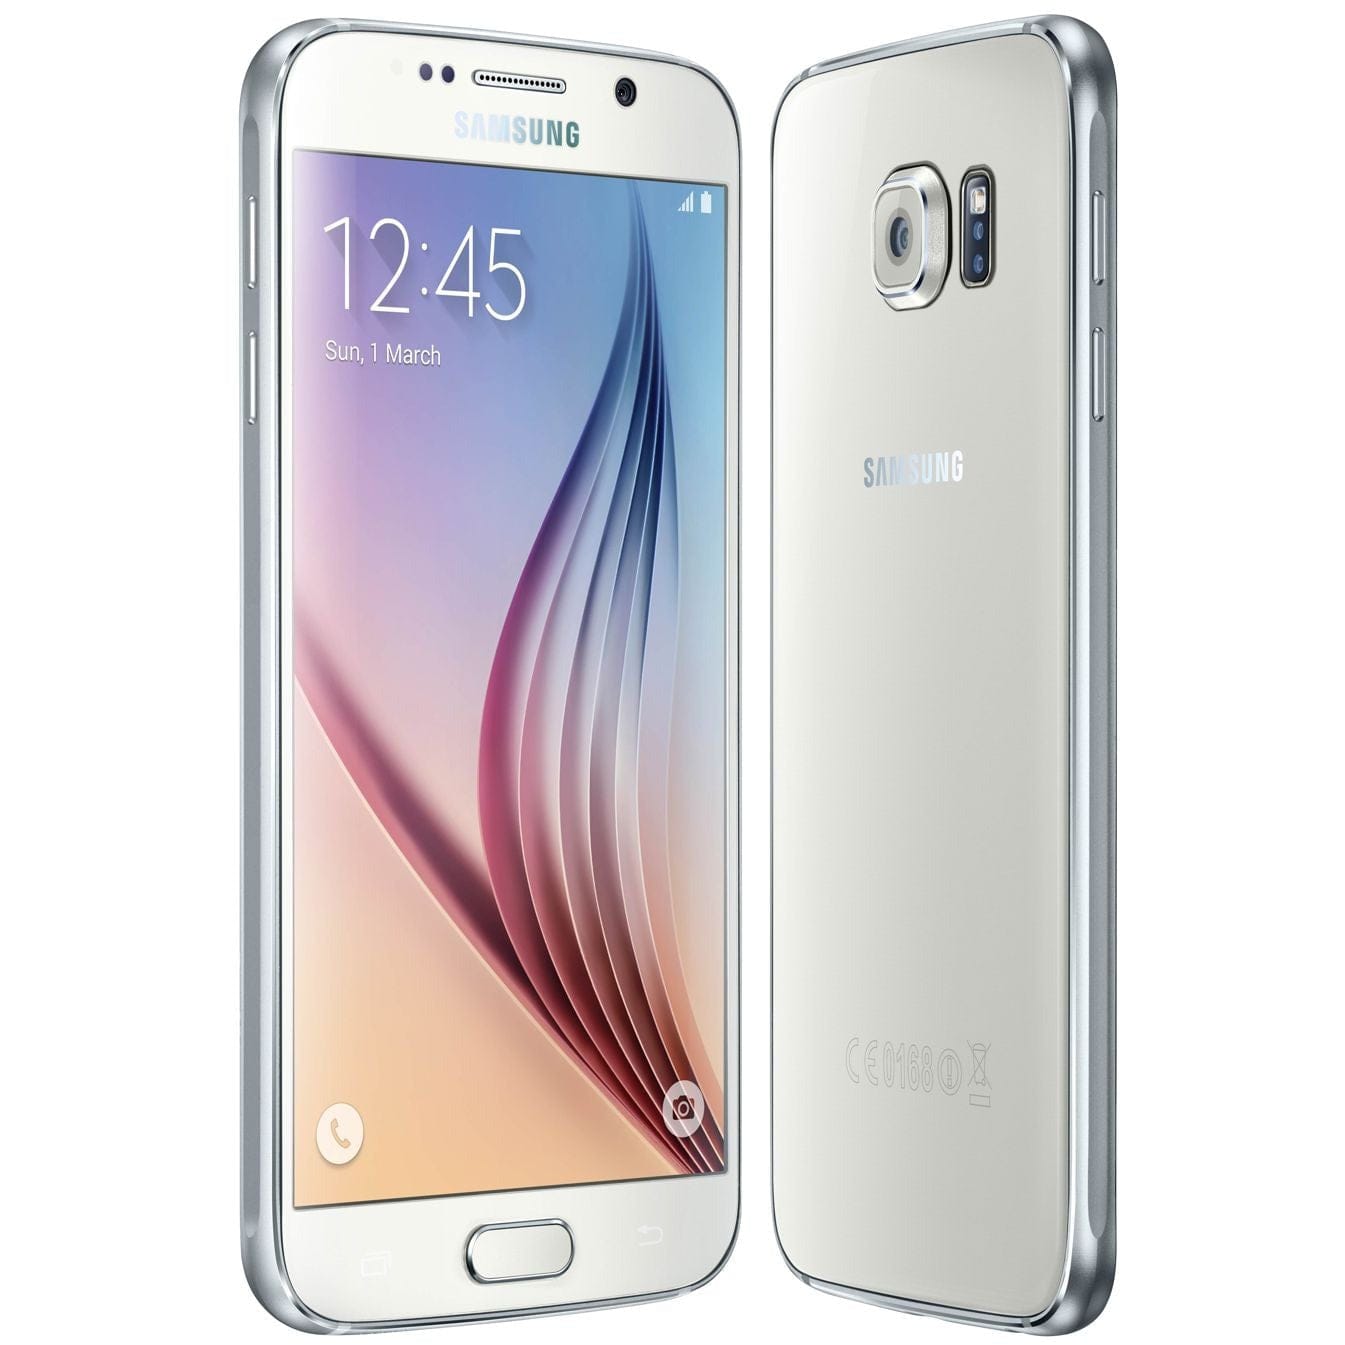 Samsung Galaxy S6 - 64 GB - White Pearl - Verizon Unlocked - CDMA-GSM